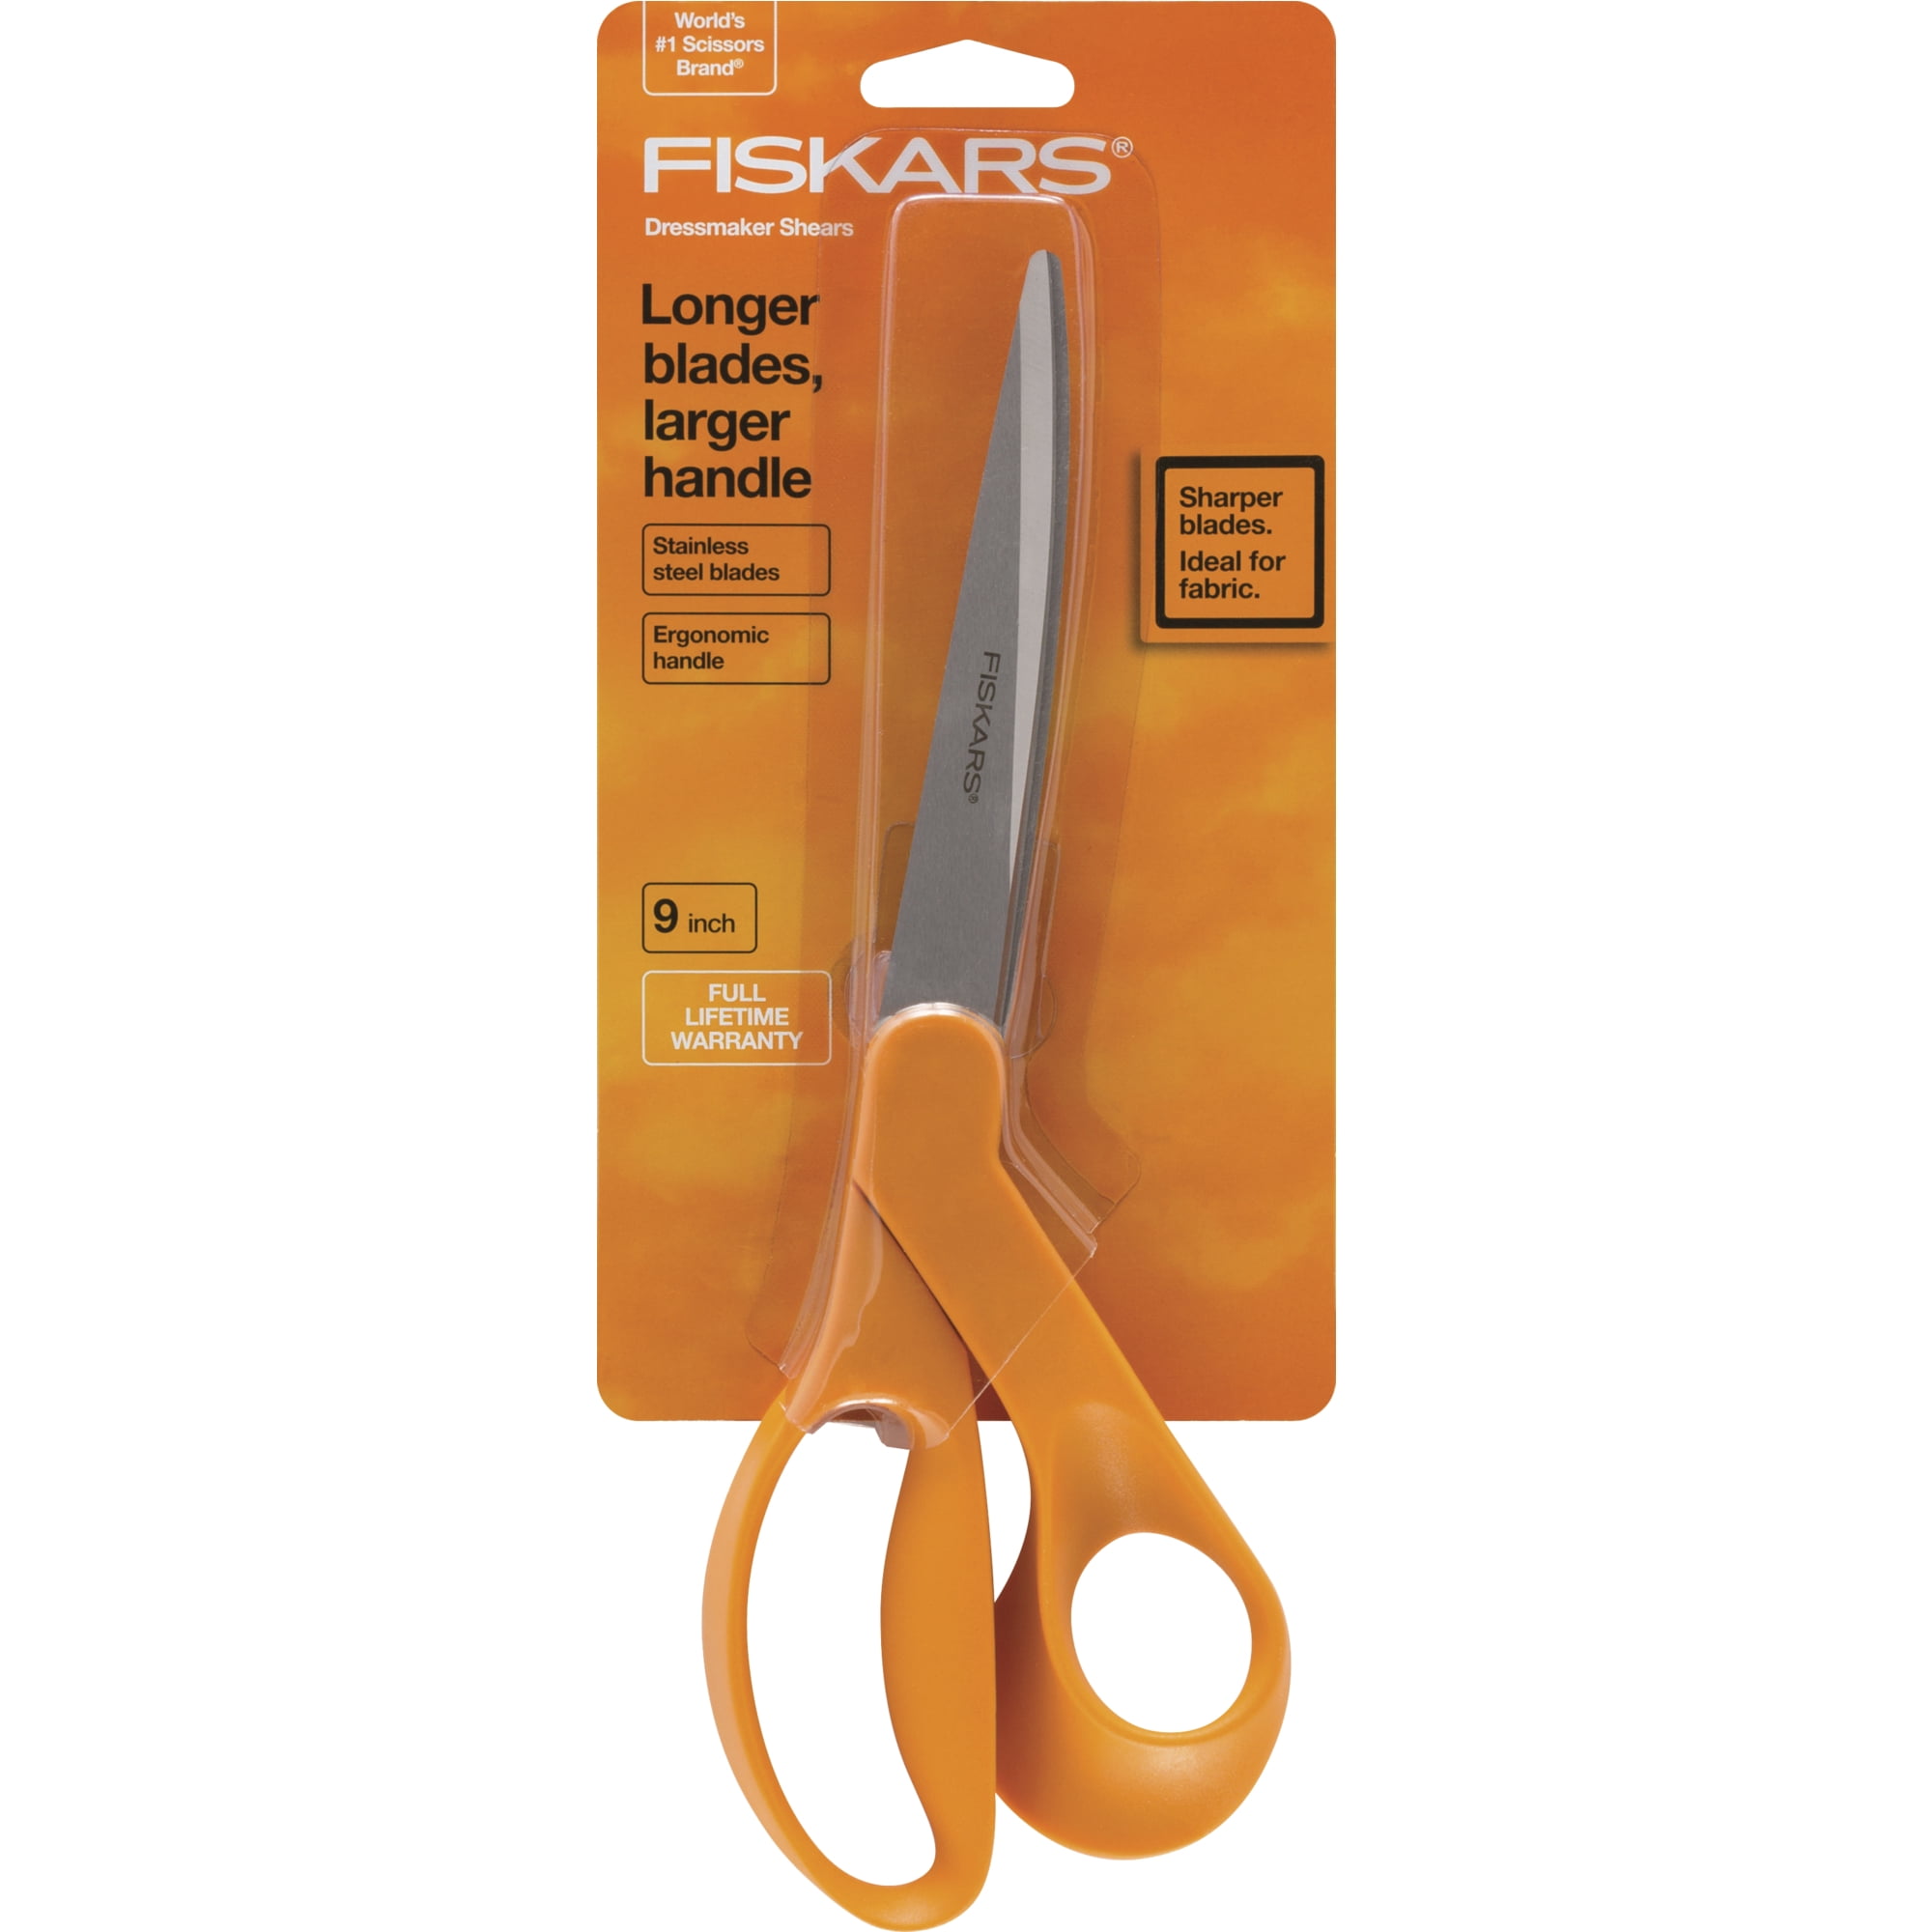  Fiskars Original Orange Handled Scissors 2-Piece Set